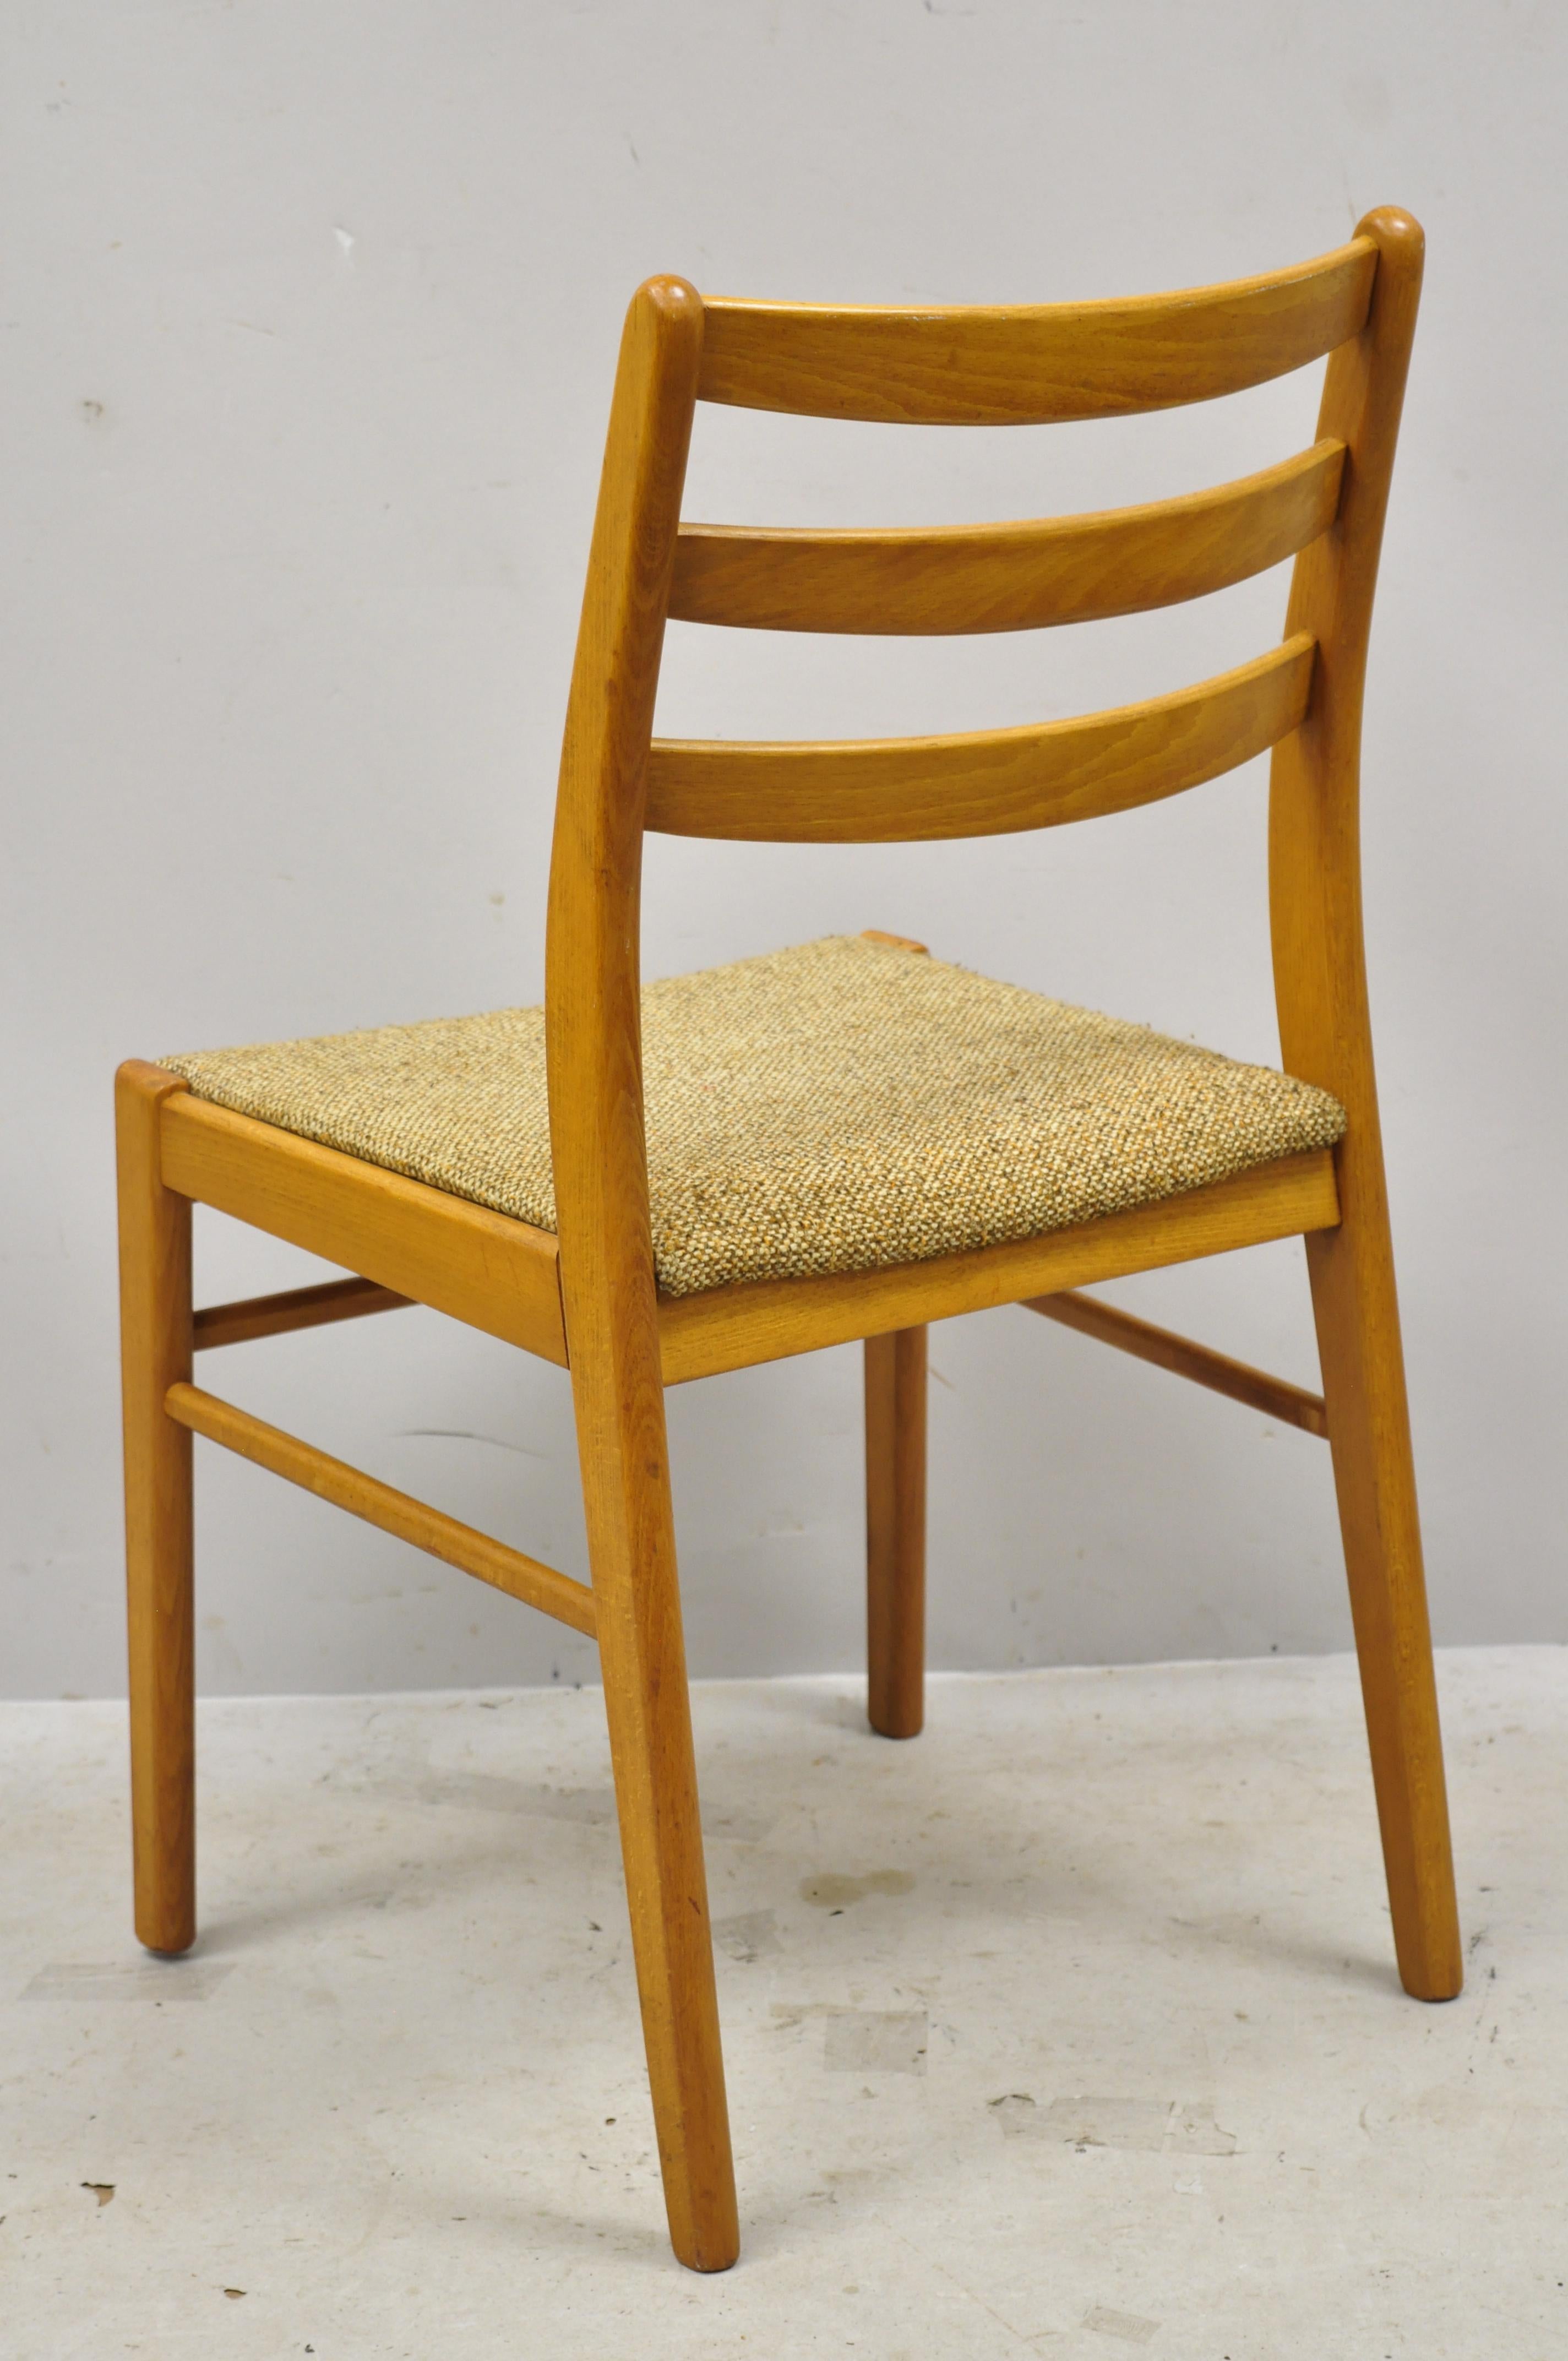 Vintage Midcentury Danish Modern Teak Ladderback Dining Room Chairs, Set of 4 For Sale 4